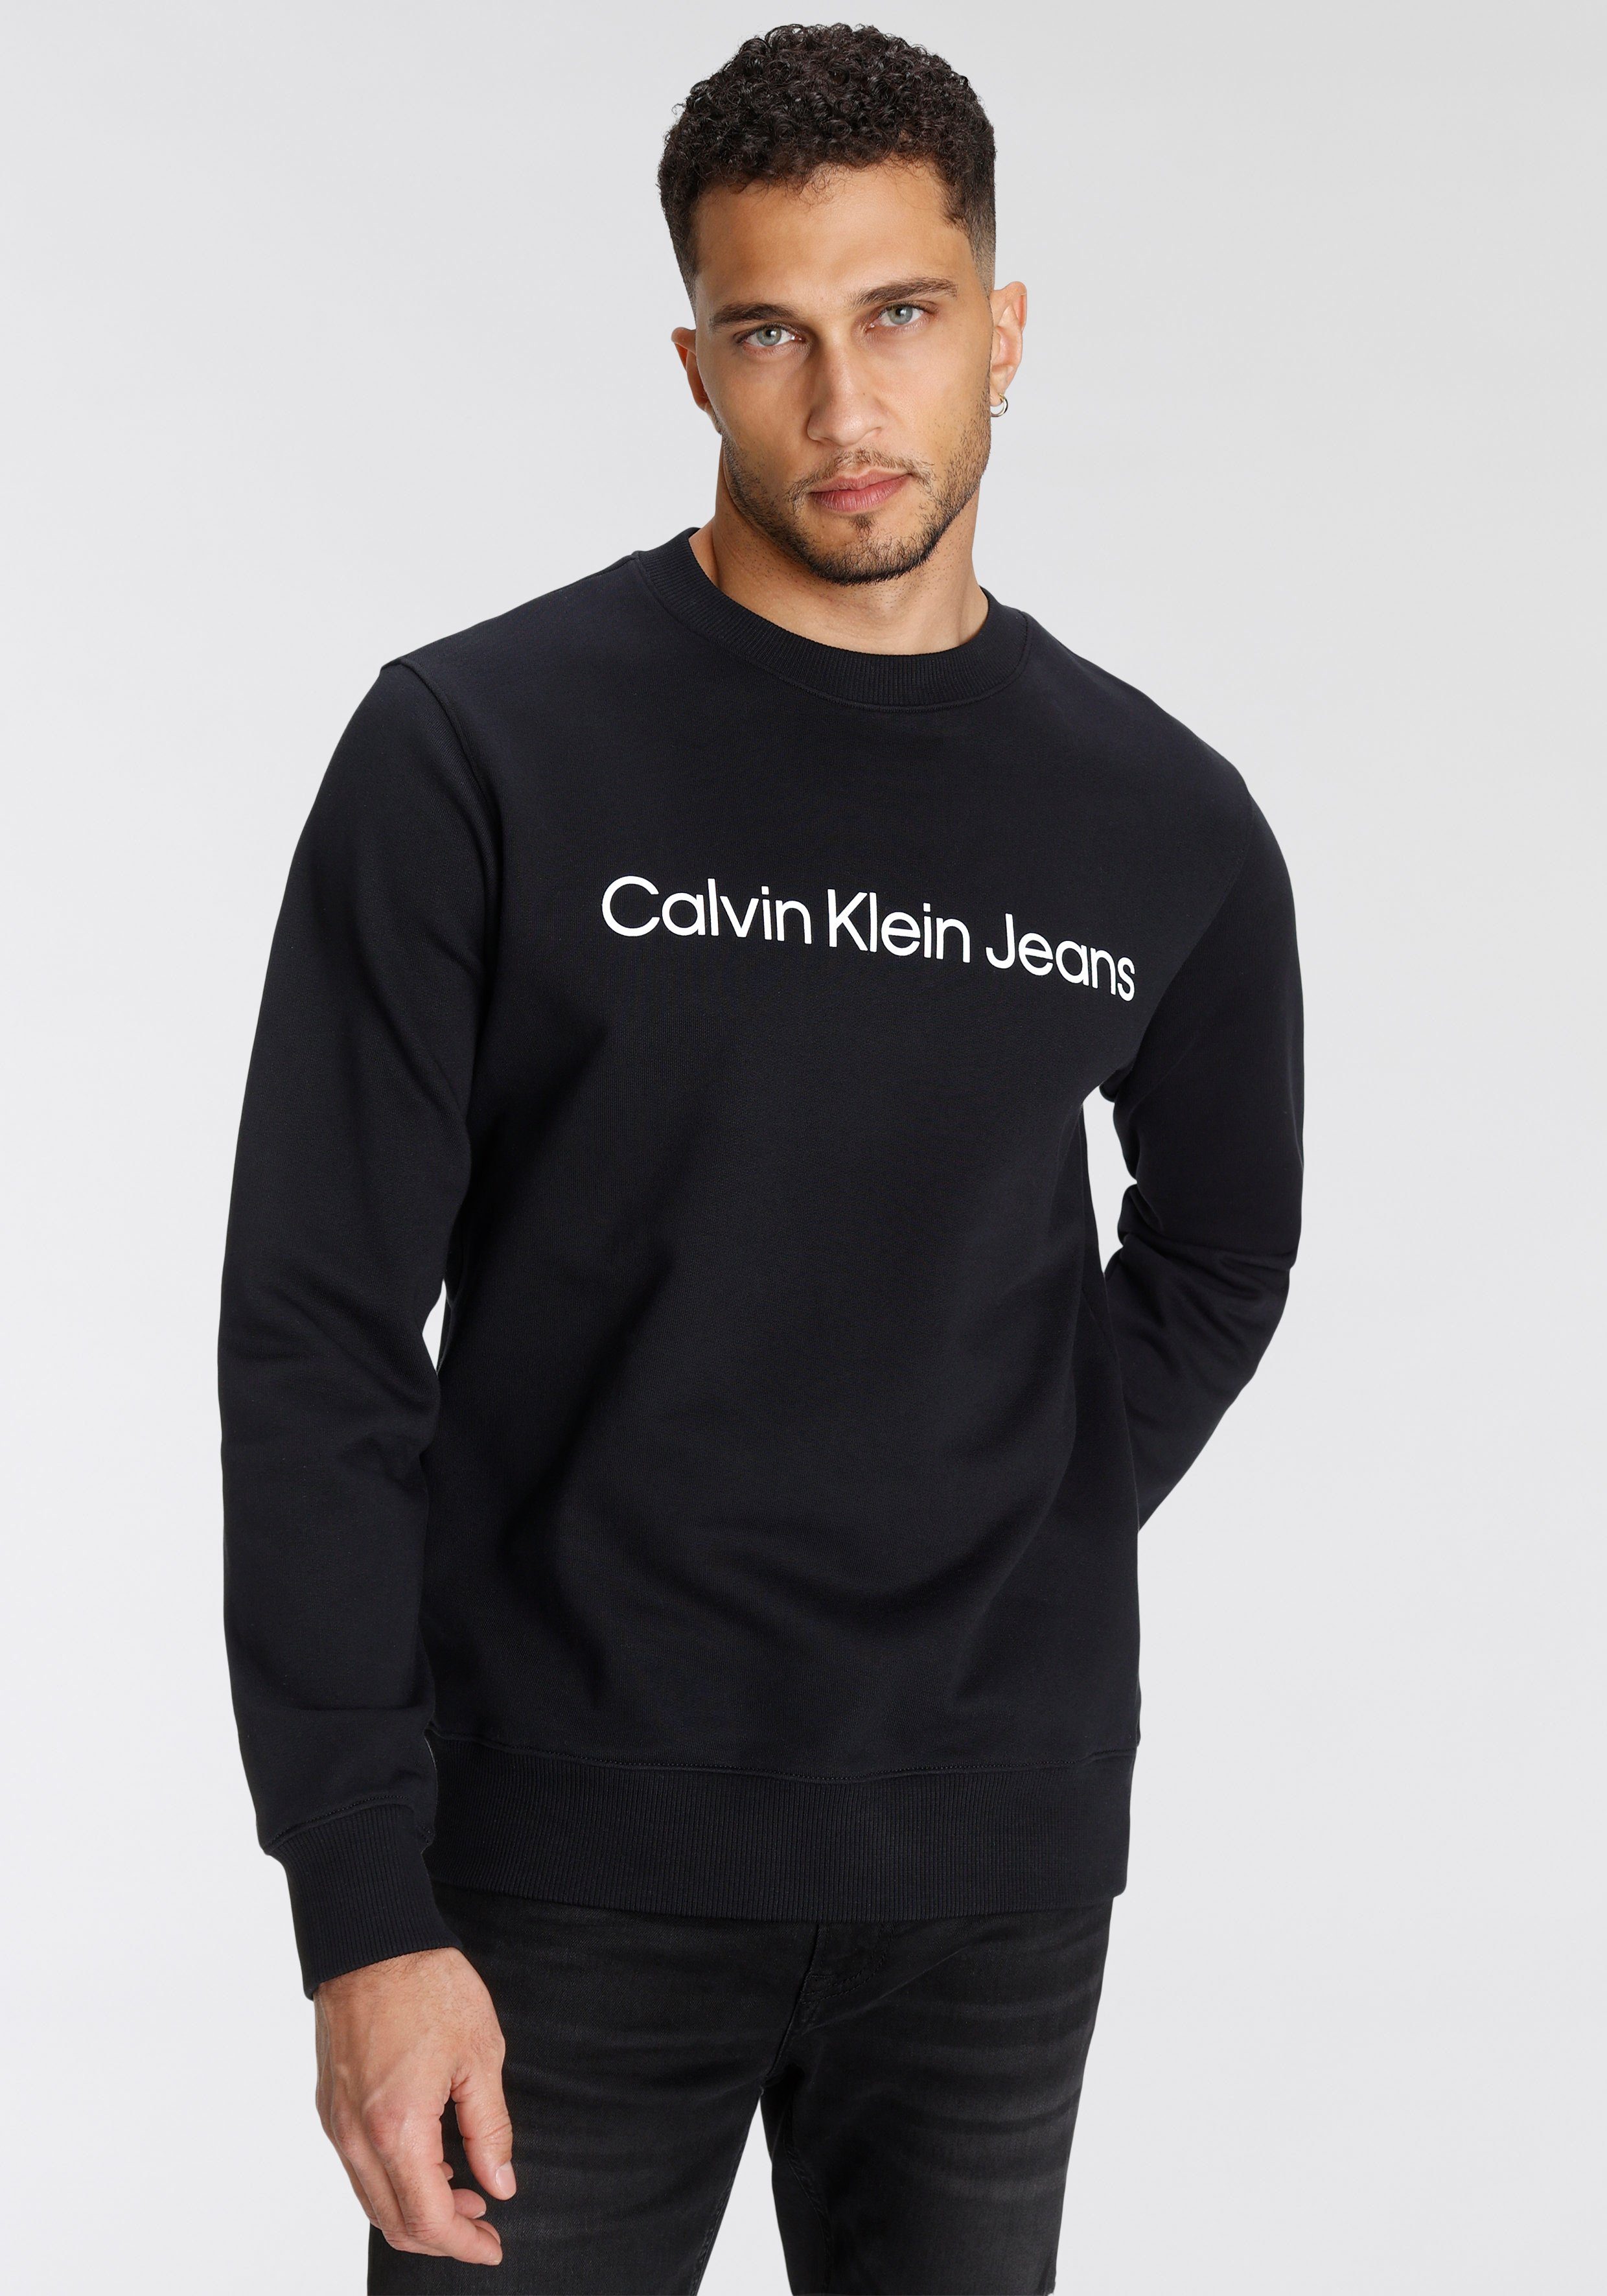 Neues Modell Calvin Klein Jeans INSTIT CORE SWEATSHIRT Sweatshirt LOGO